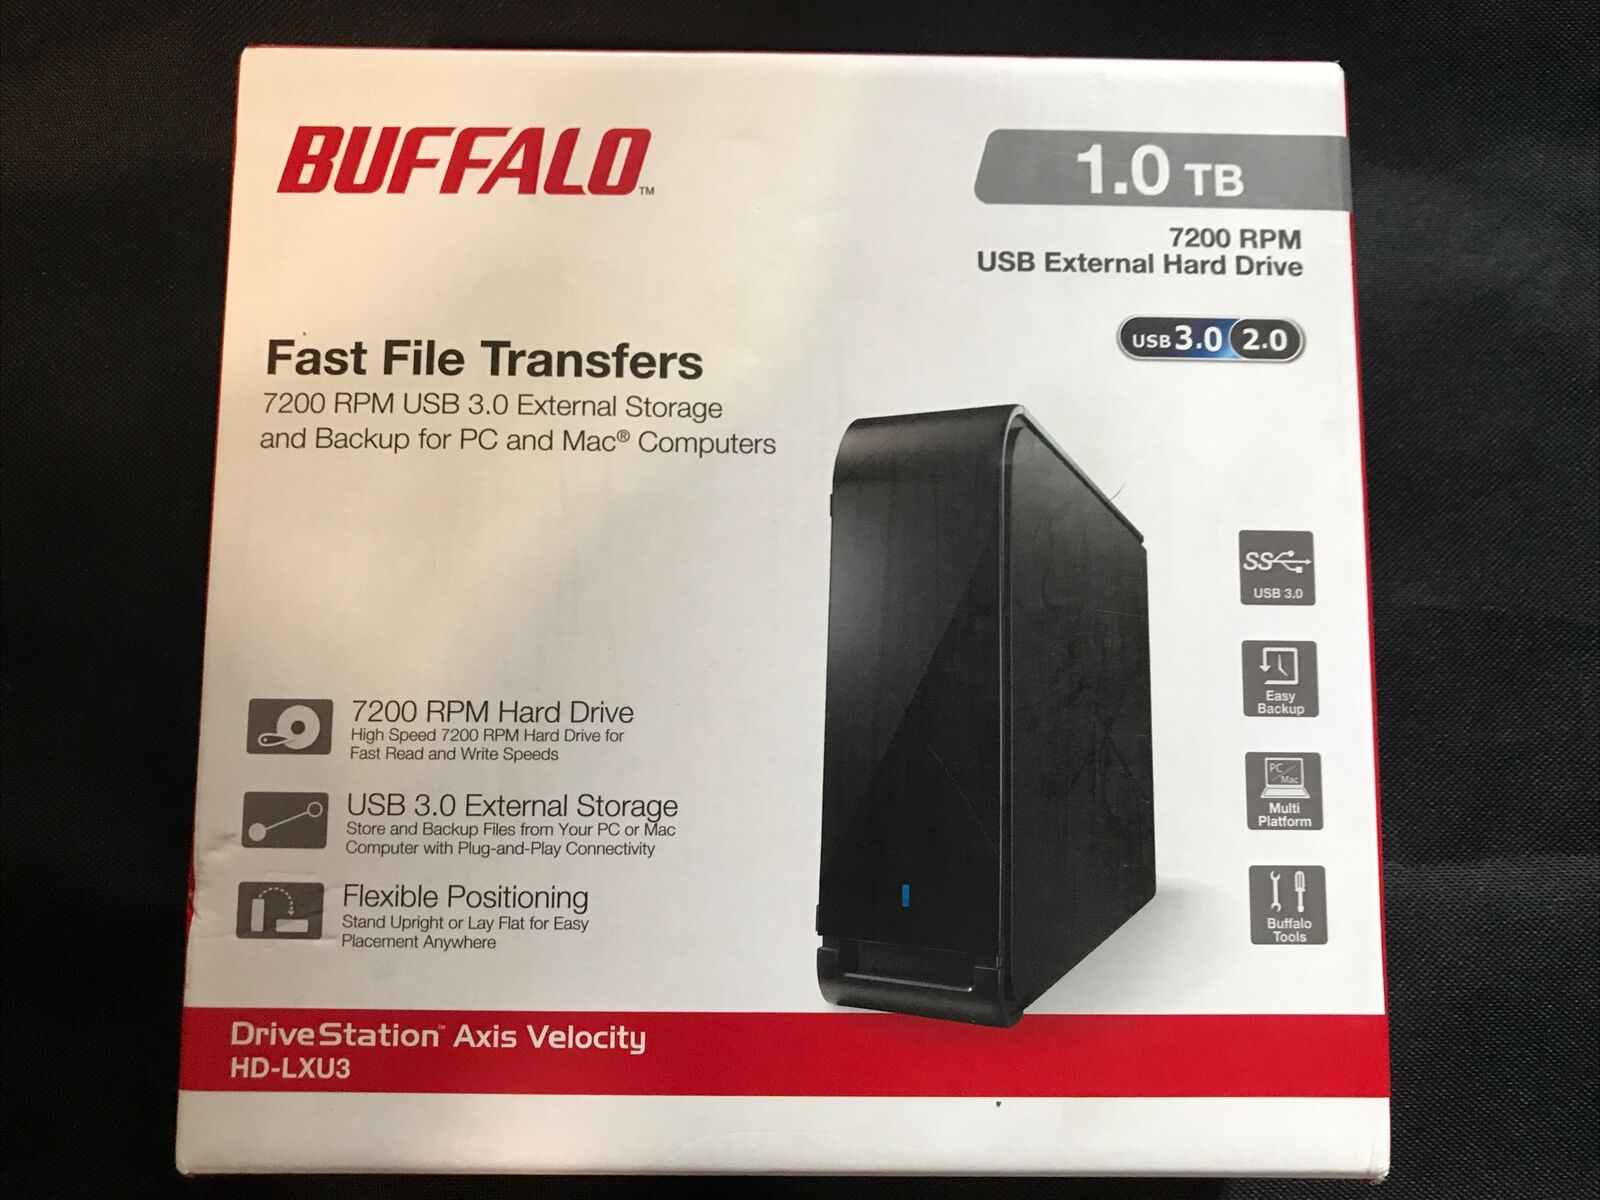 NEW Buffalo External HDD USB 3.0 Hard Drive 1.0 TB Sealed